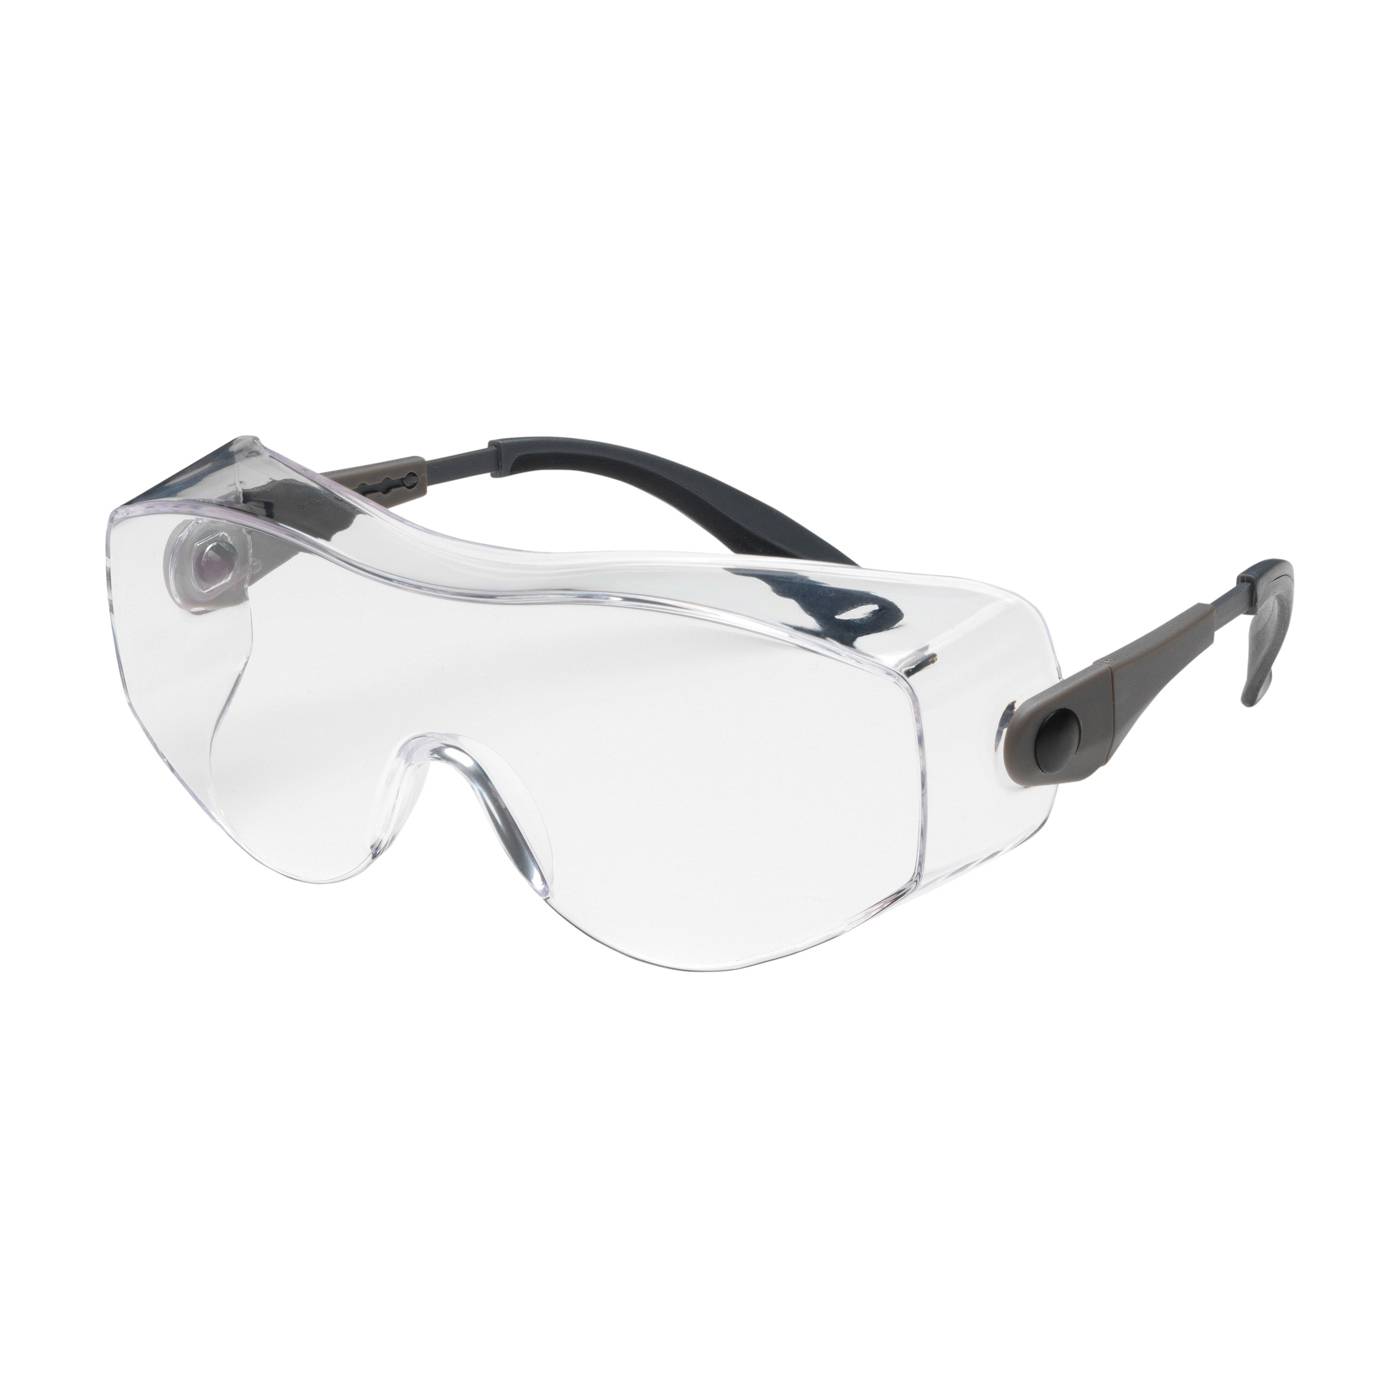 Bouton® 250-98-0020 OverSite™ 250-98 Single Lens Safety Glasses, Anti-Fog, Clear Lens, Rimless Frame, Black/Gray, Polycarbonate Frame, Polycarbonate Lens, ANSI Z87.1+, CSA Z94.3 (Discontinued by Manufacturer)